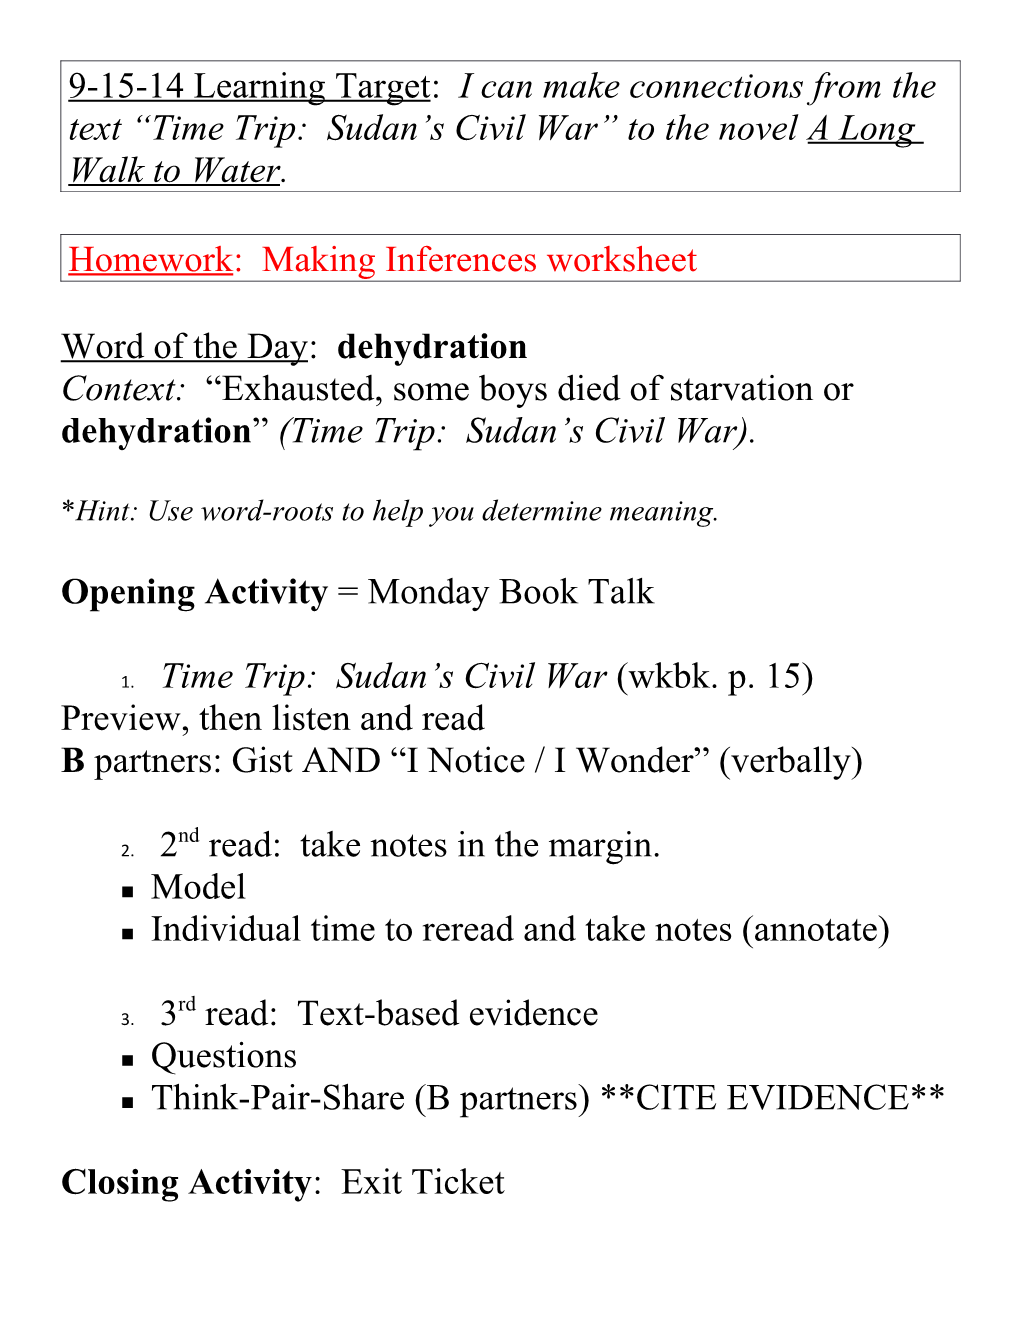 Homework: Making Inferences Worksheet